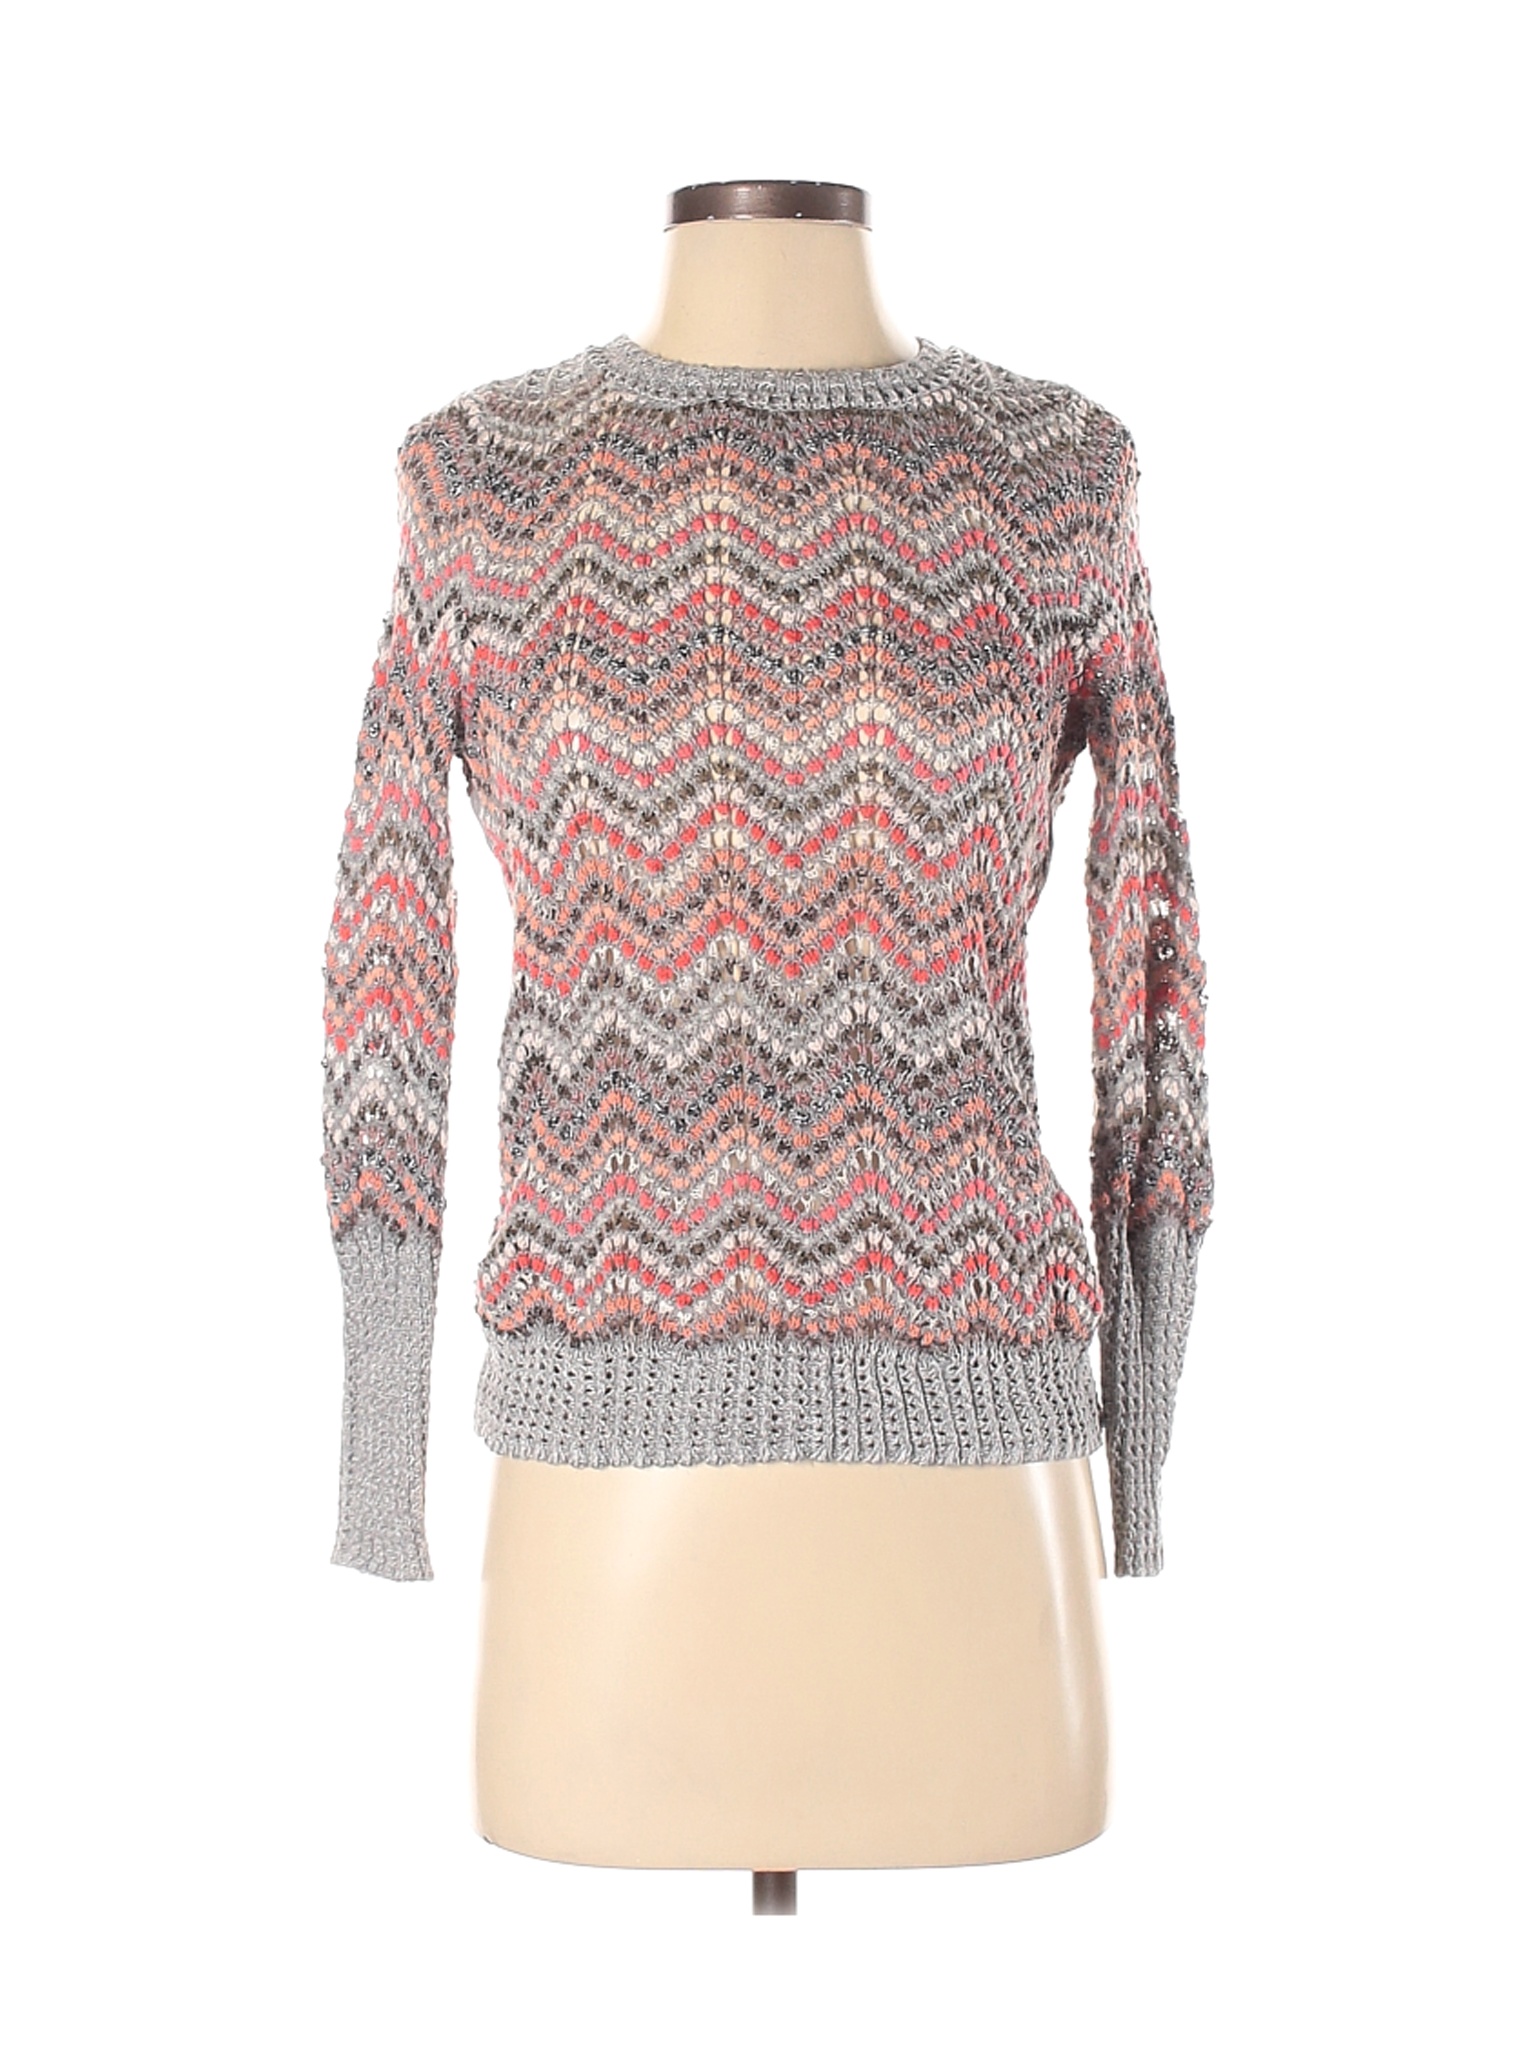 Nic + Zoe Women Gray Pullover Sweater S Petites | eBay